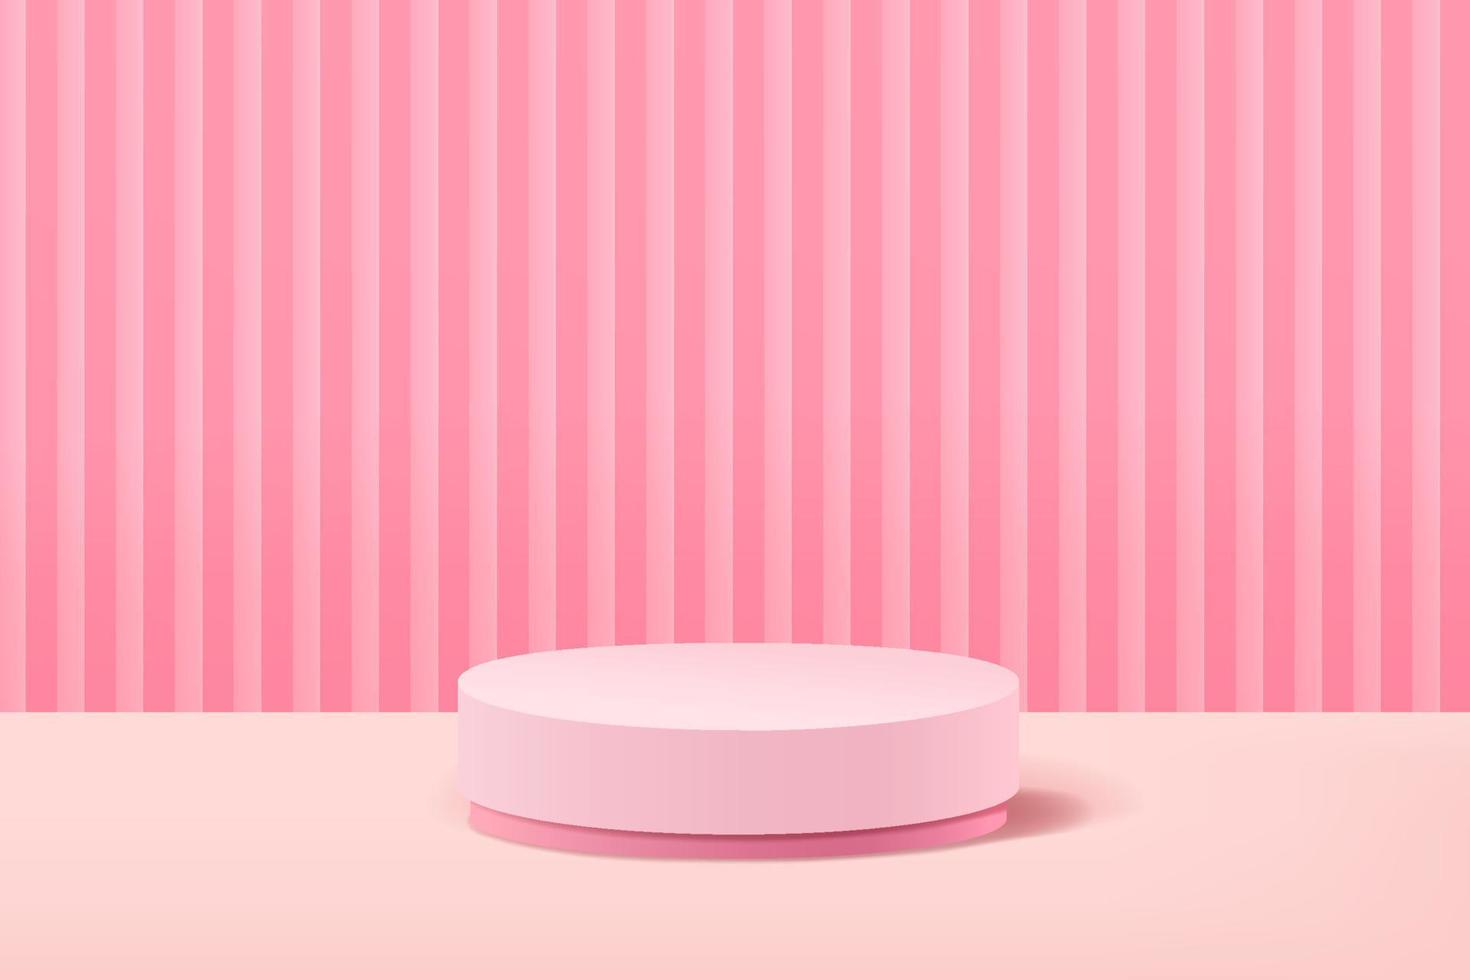 fundo de forma geométrica abstrata rosa pastel e pódio de pedestal redondo 3d vetor